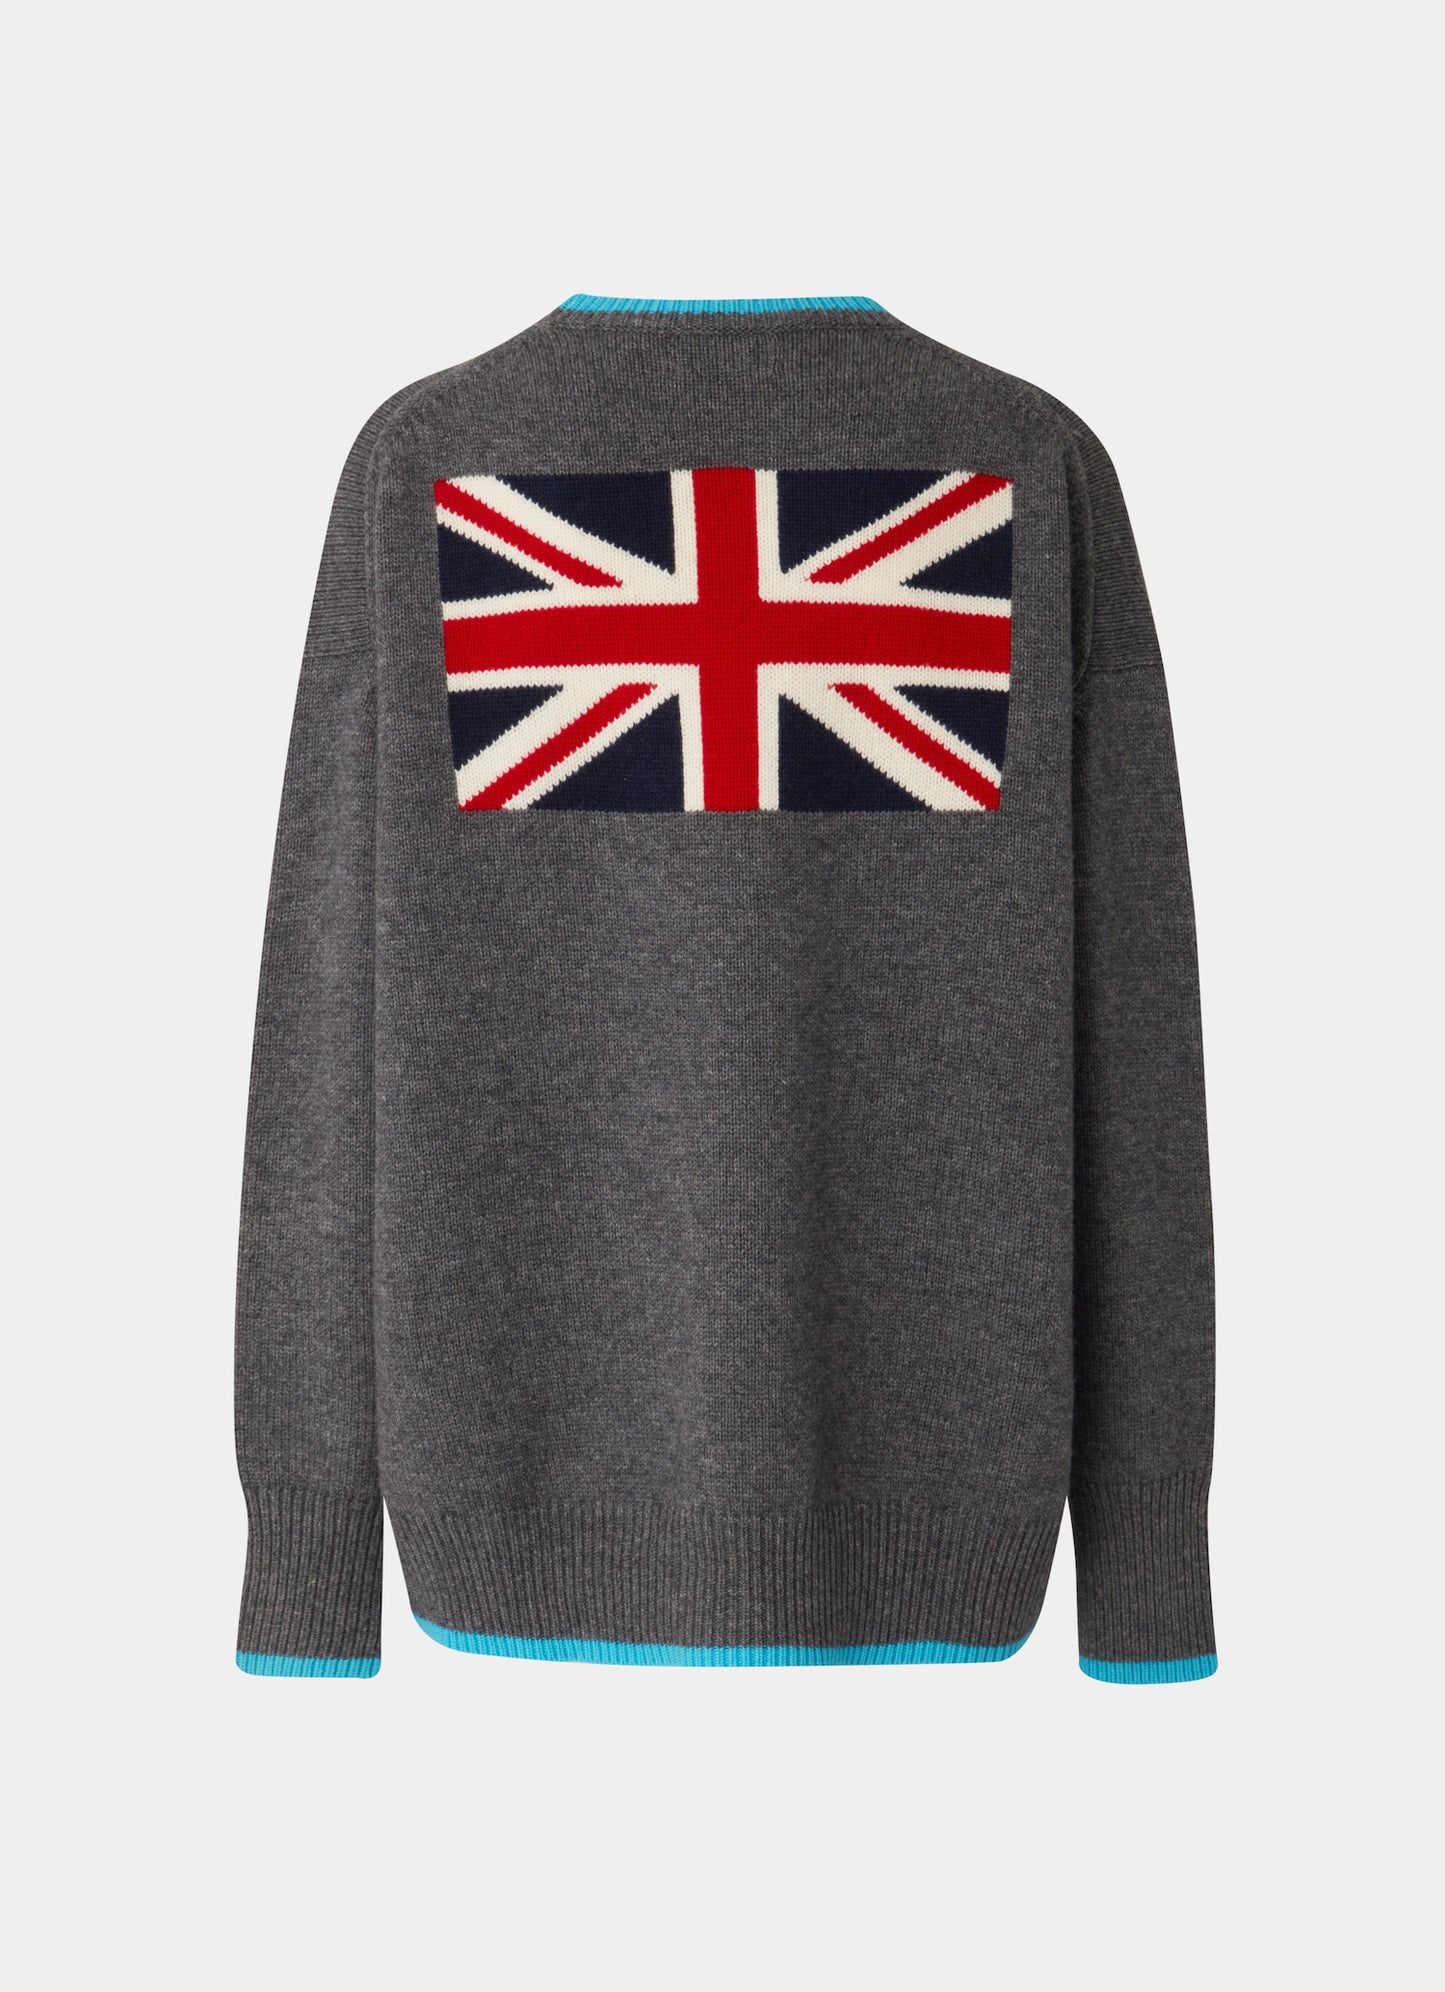 City Intarsia London Sweater